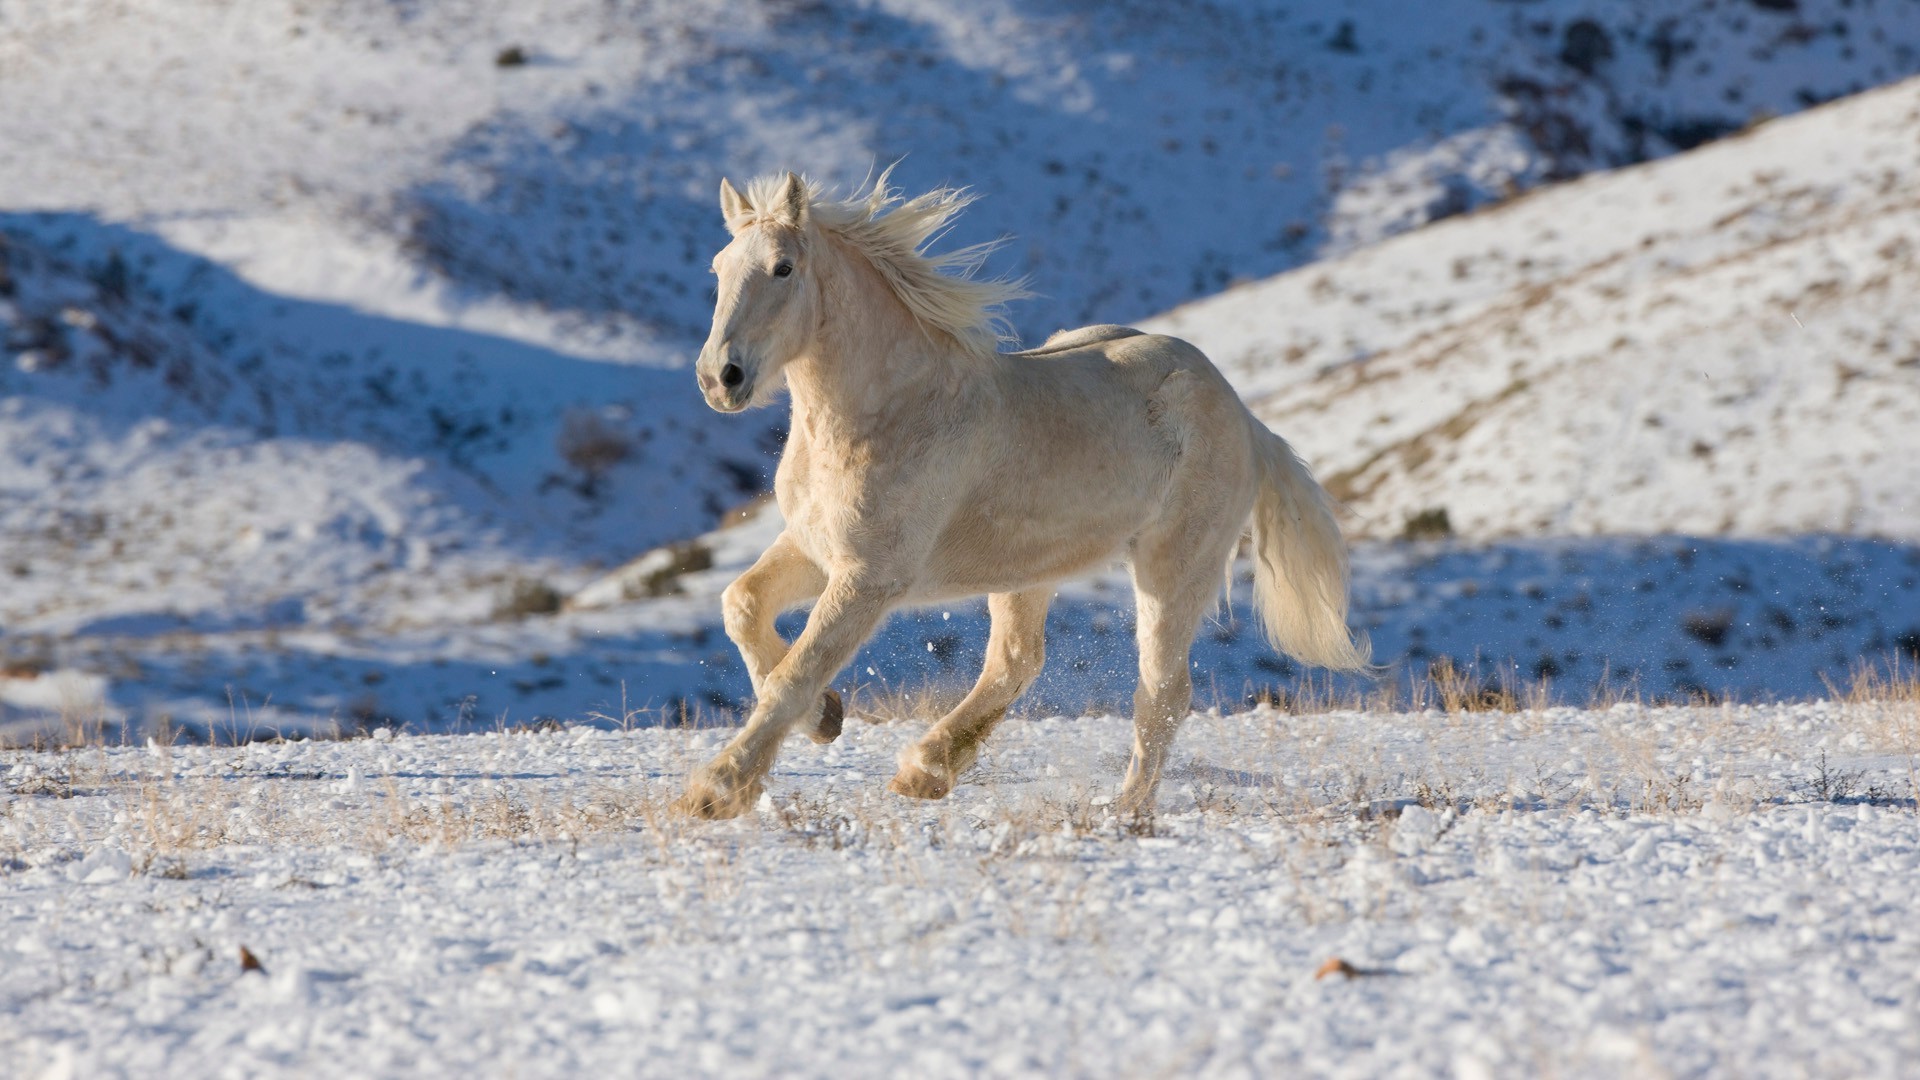 horses snow winter nature outdoors animal cavalry mammal horse wild mare rural mane wildlife field cold equine